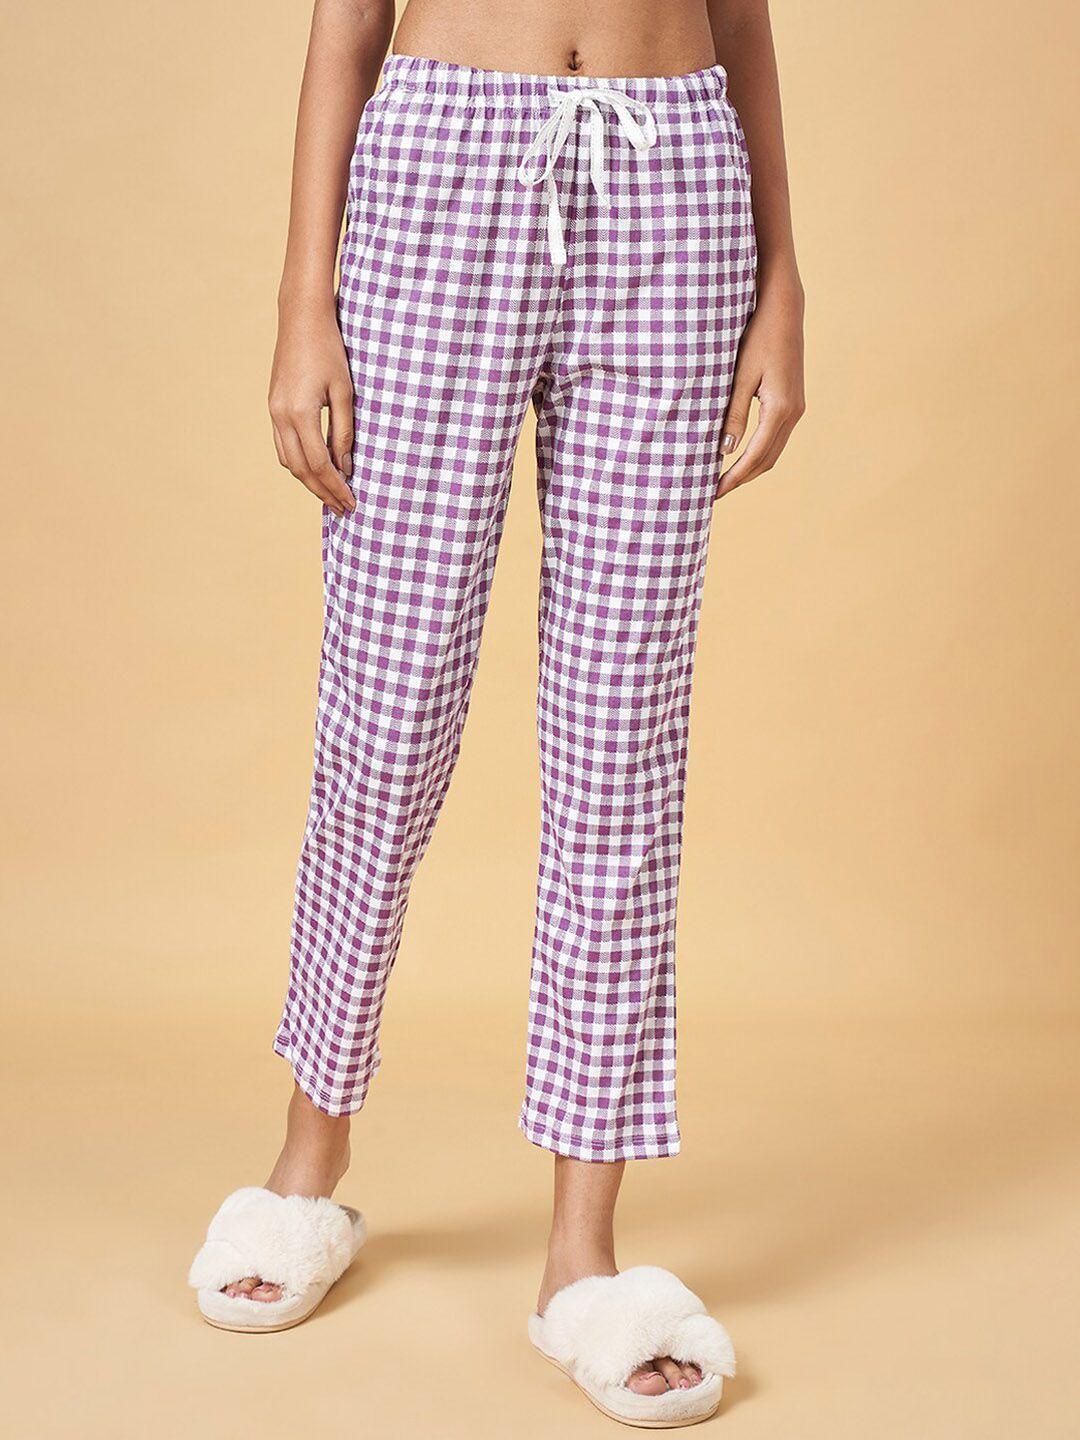 dreamz by pantaloons women checked pure cotton pyjamas